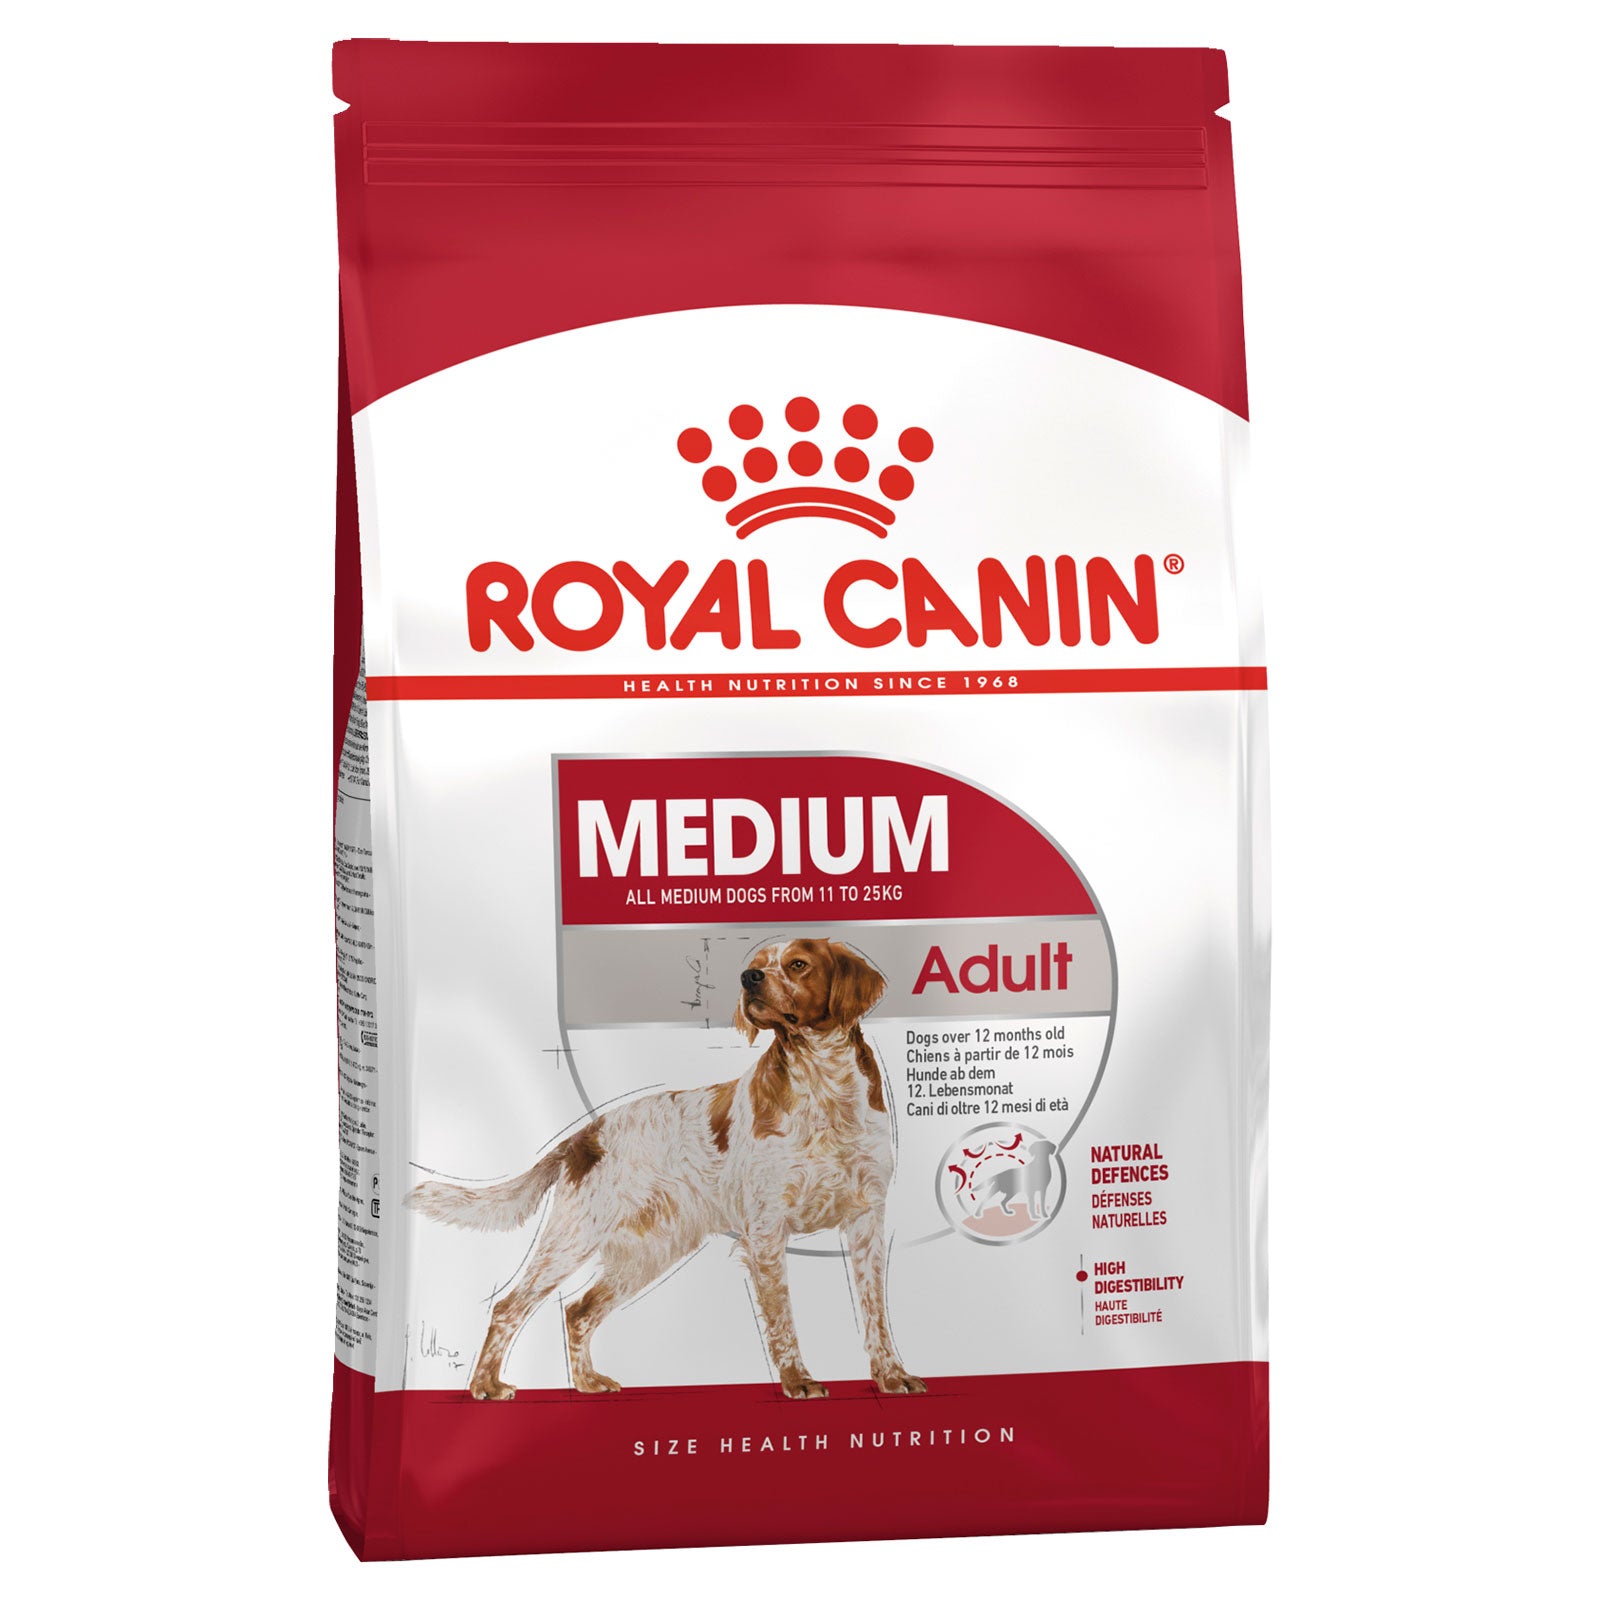 Royal Canin Dog Food Adult Medium